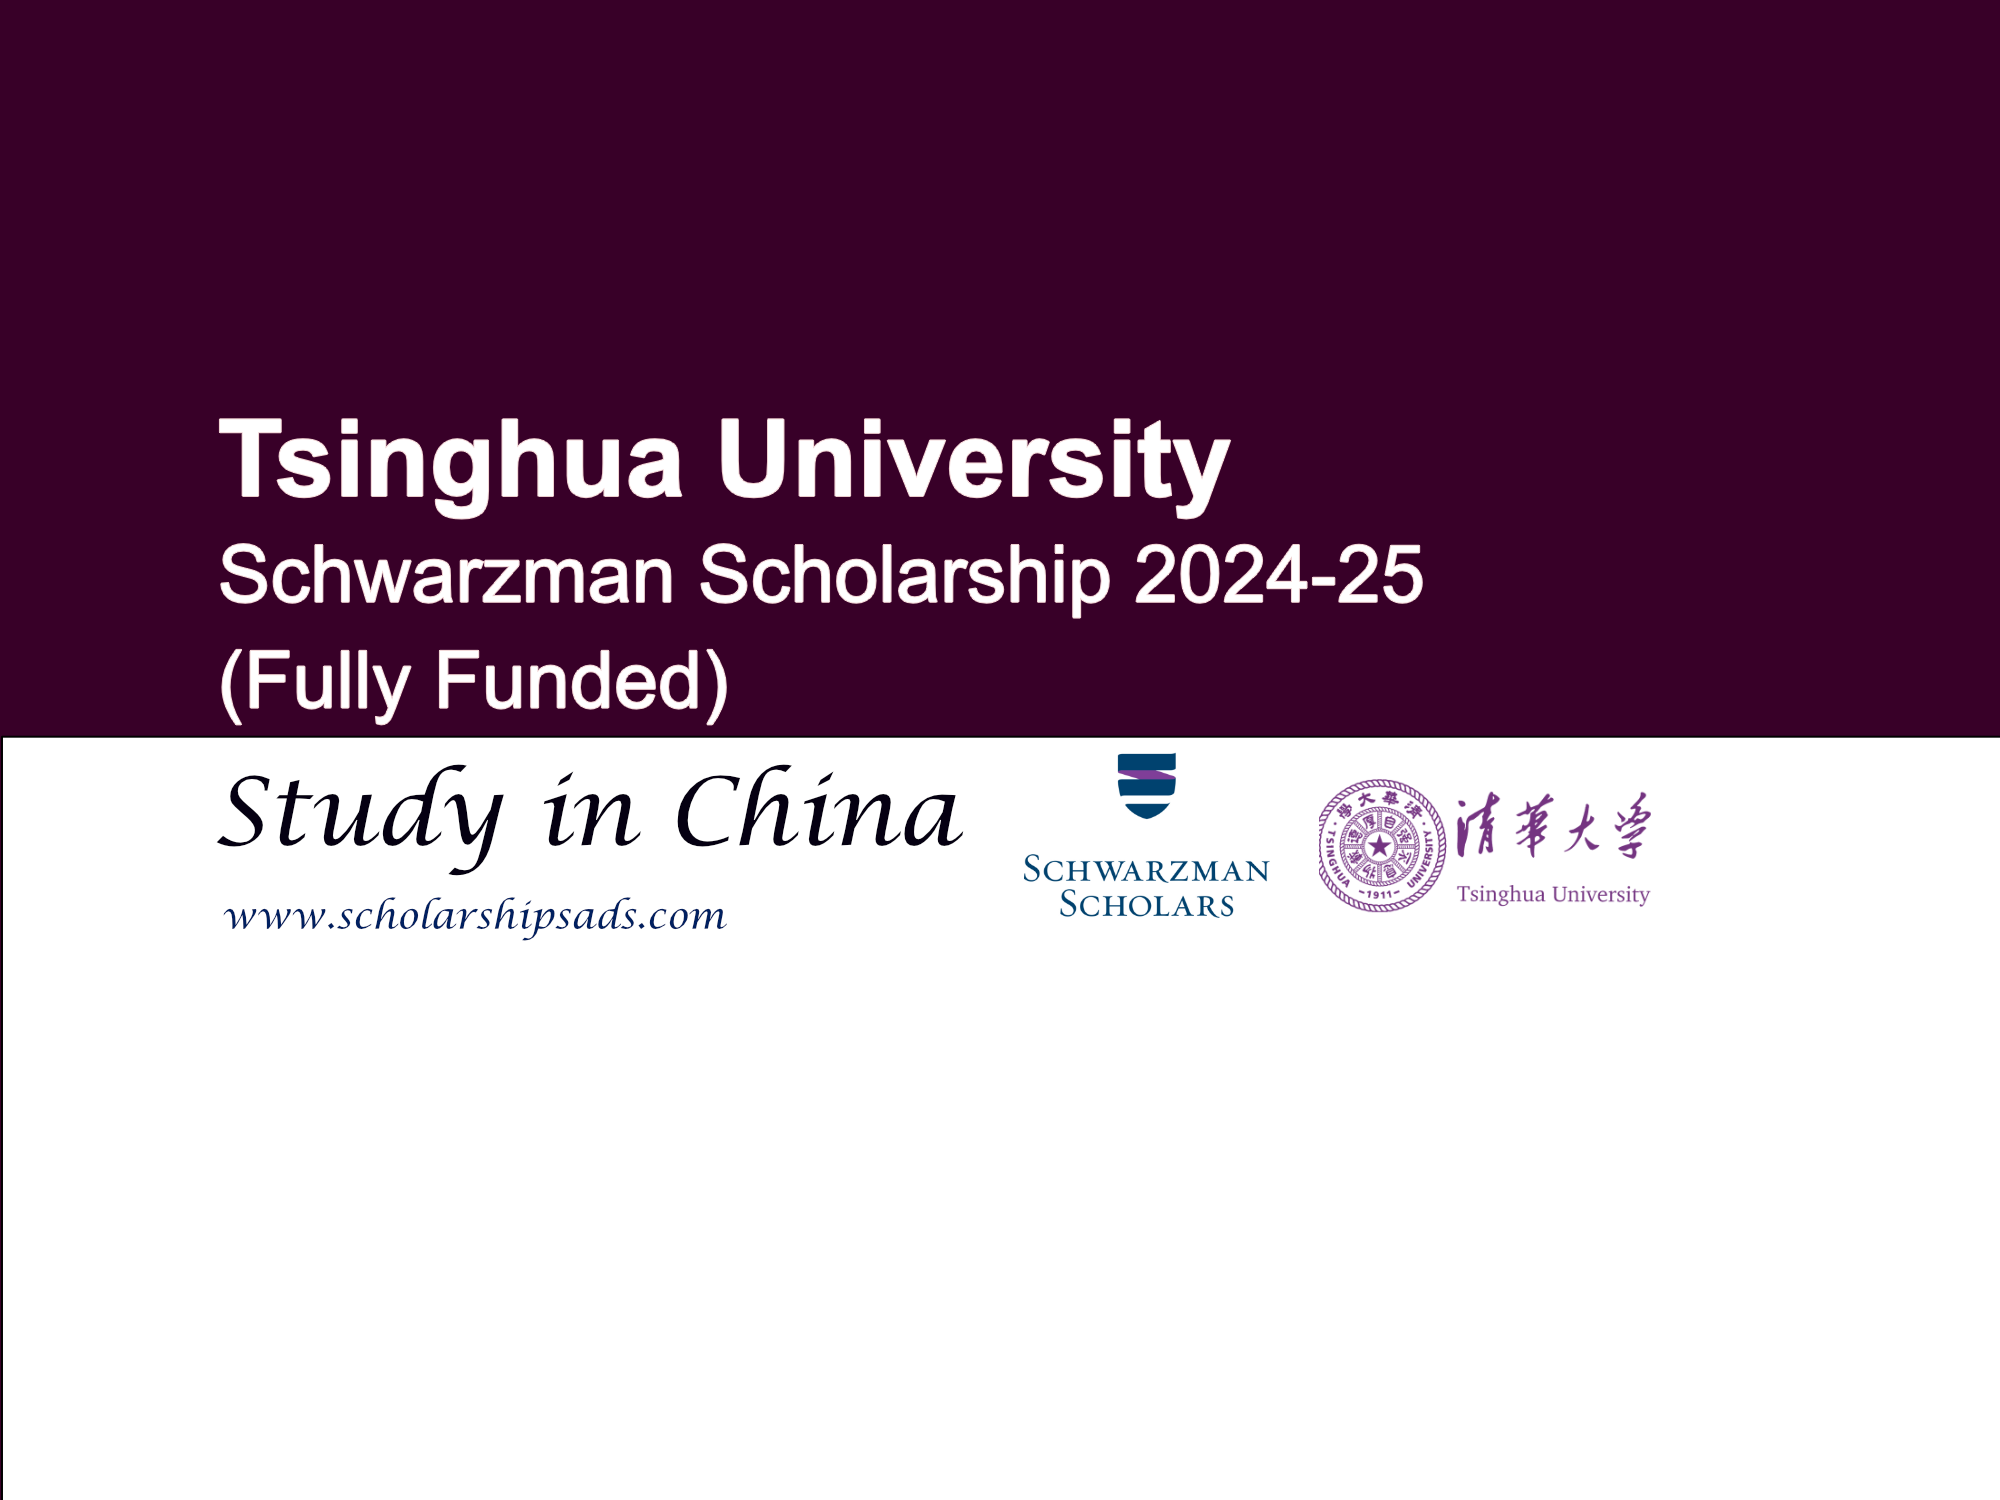 Tsinghua University Schwarzman Scholarship 2024-25, China. (Fully Funded)